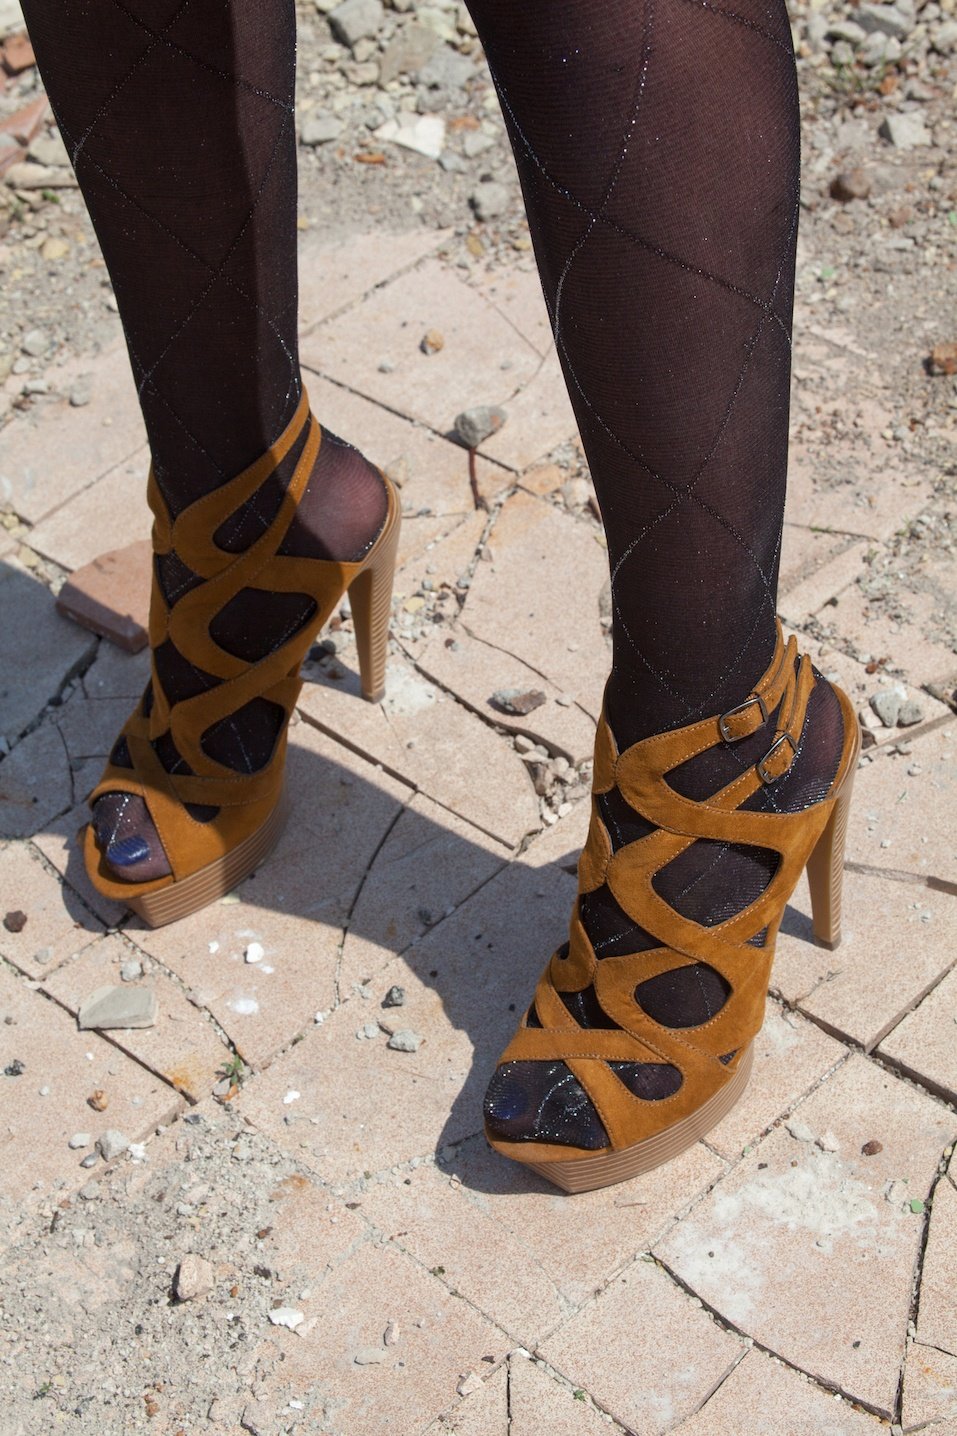 Woman's feet in high heel sandals